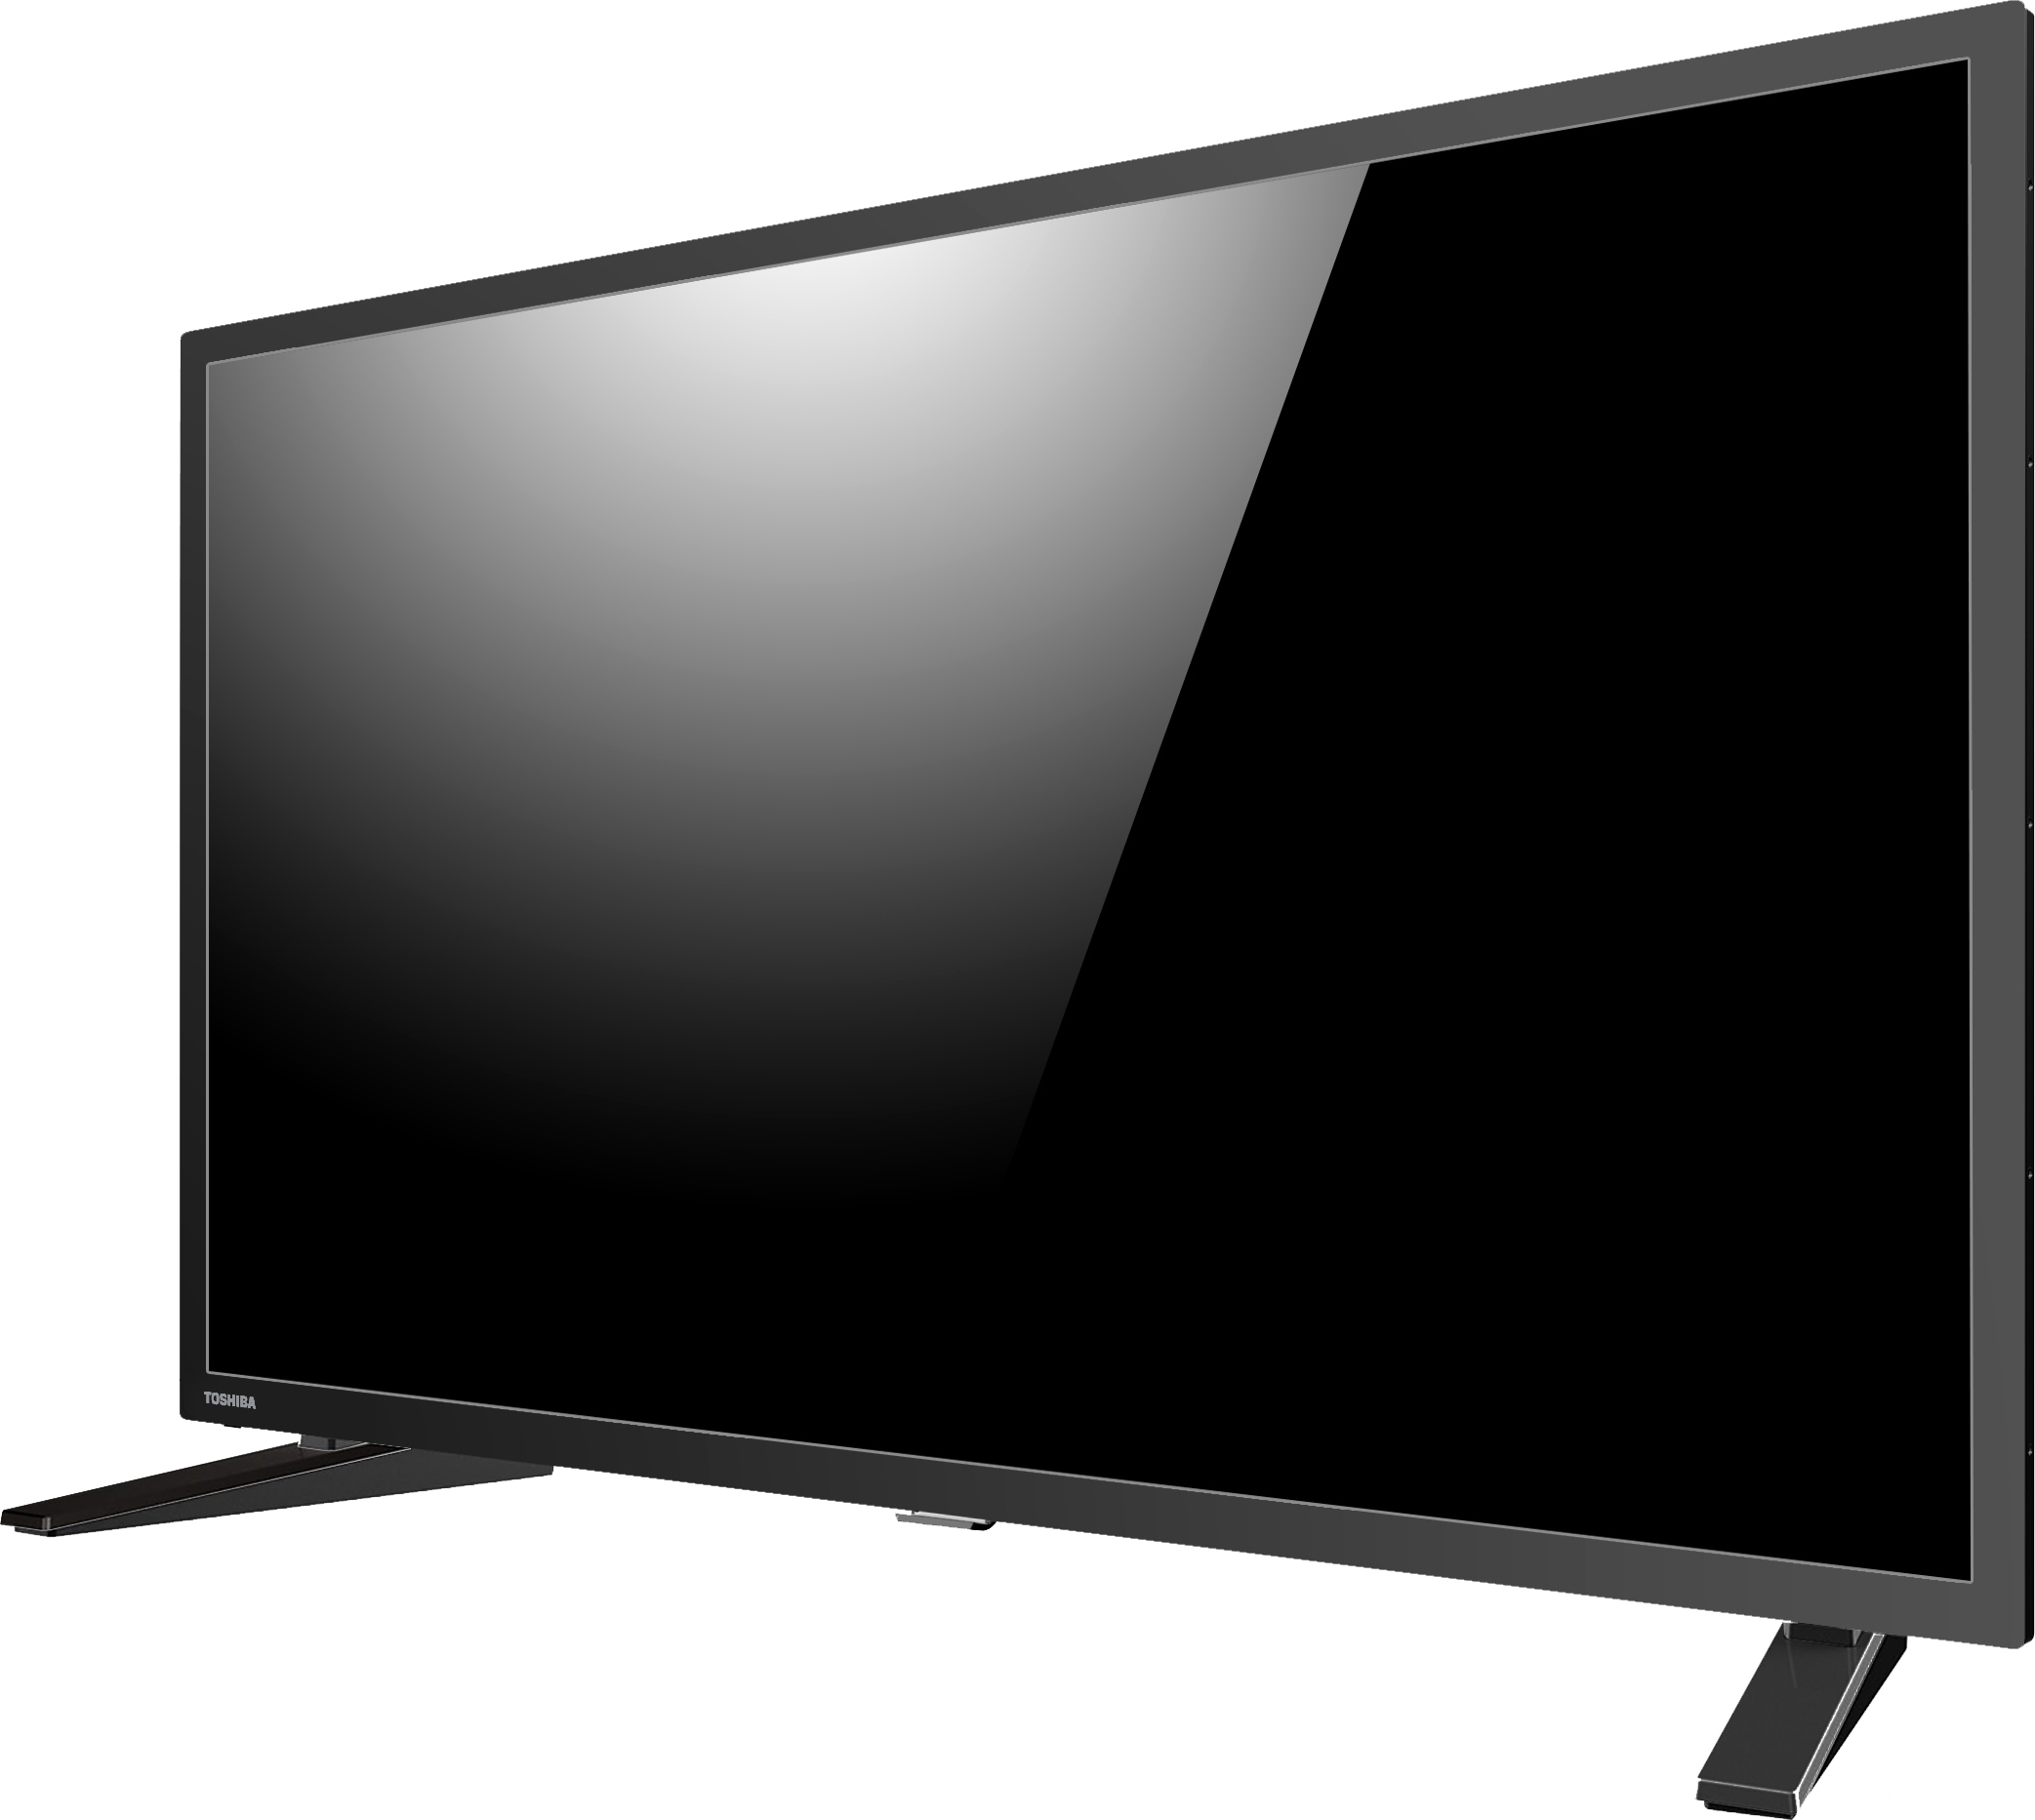 Куплю телевизор в минске цена. Тошиба телевизор 66см диагональ. Телевизор Тошиба 127 см. Toshiba 32s2855ec с пультом. Телевизор Тошиба 32 диагональ.